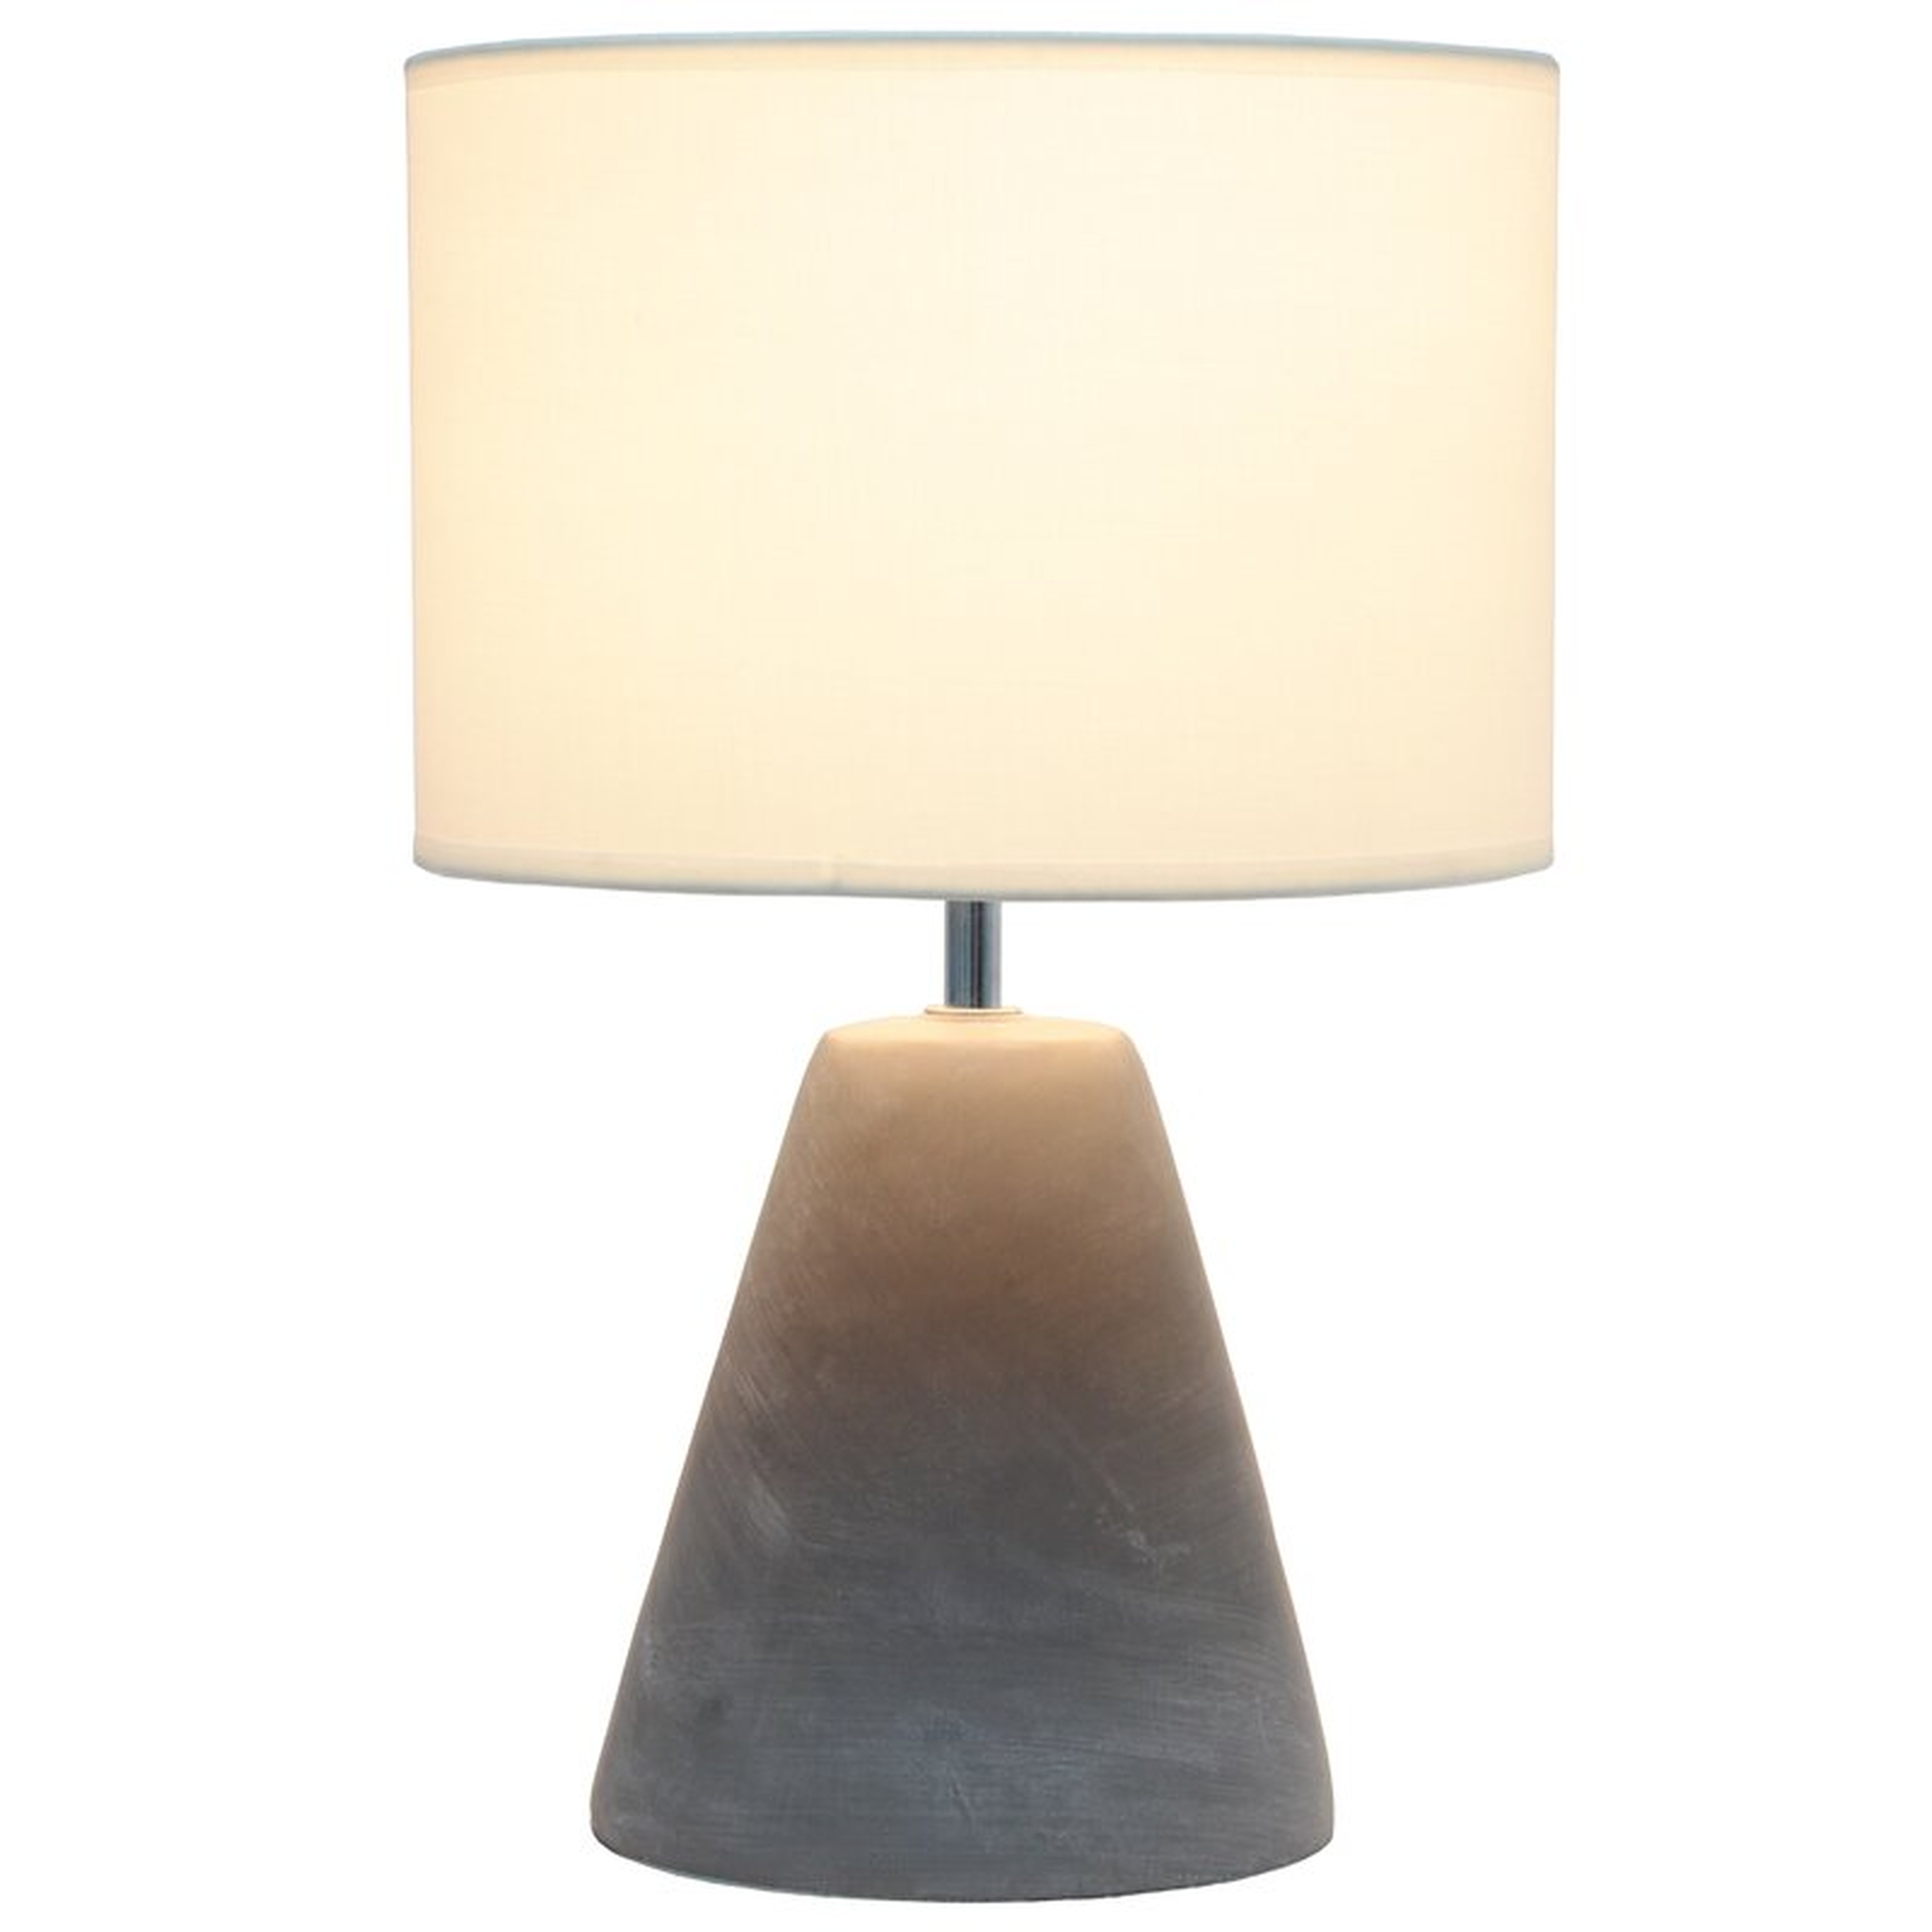 Aleah 14.2" Gray Table Lamp - Wayfair